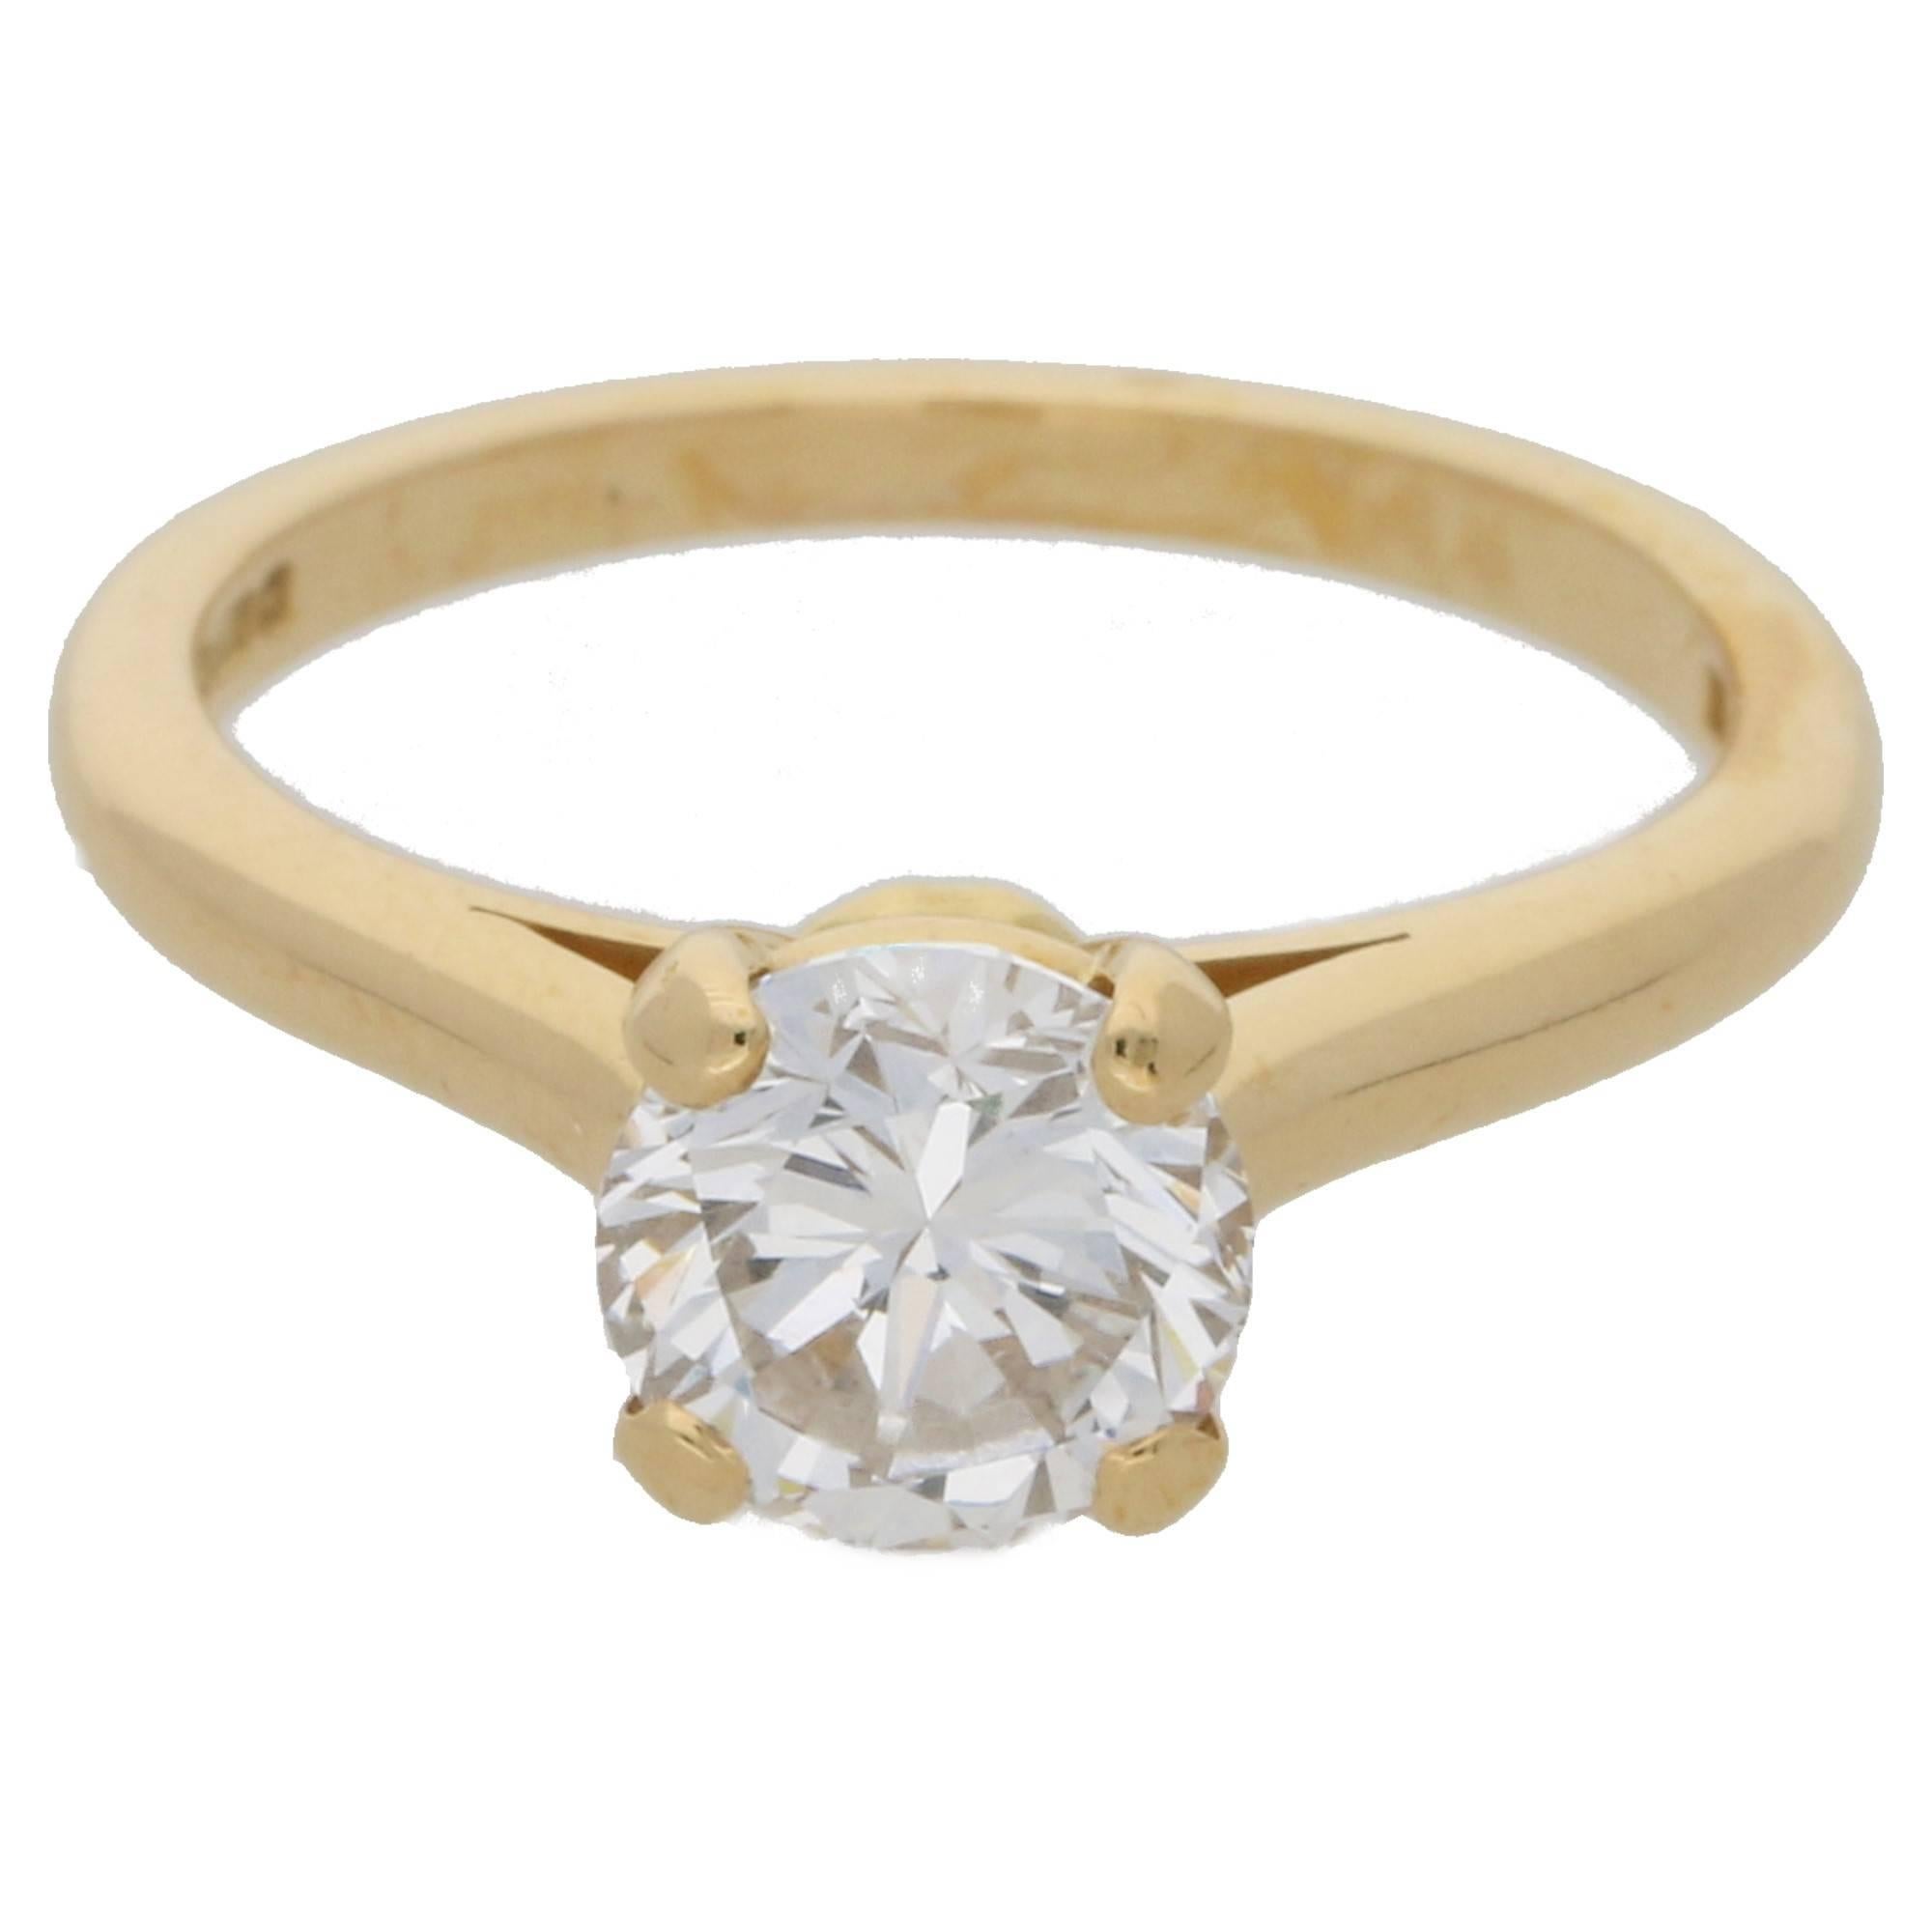 Cartier 1.25 Carat Single Stone Diamond Gold Ring